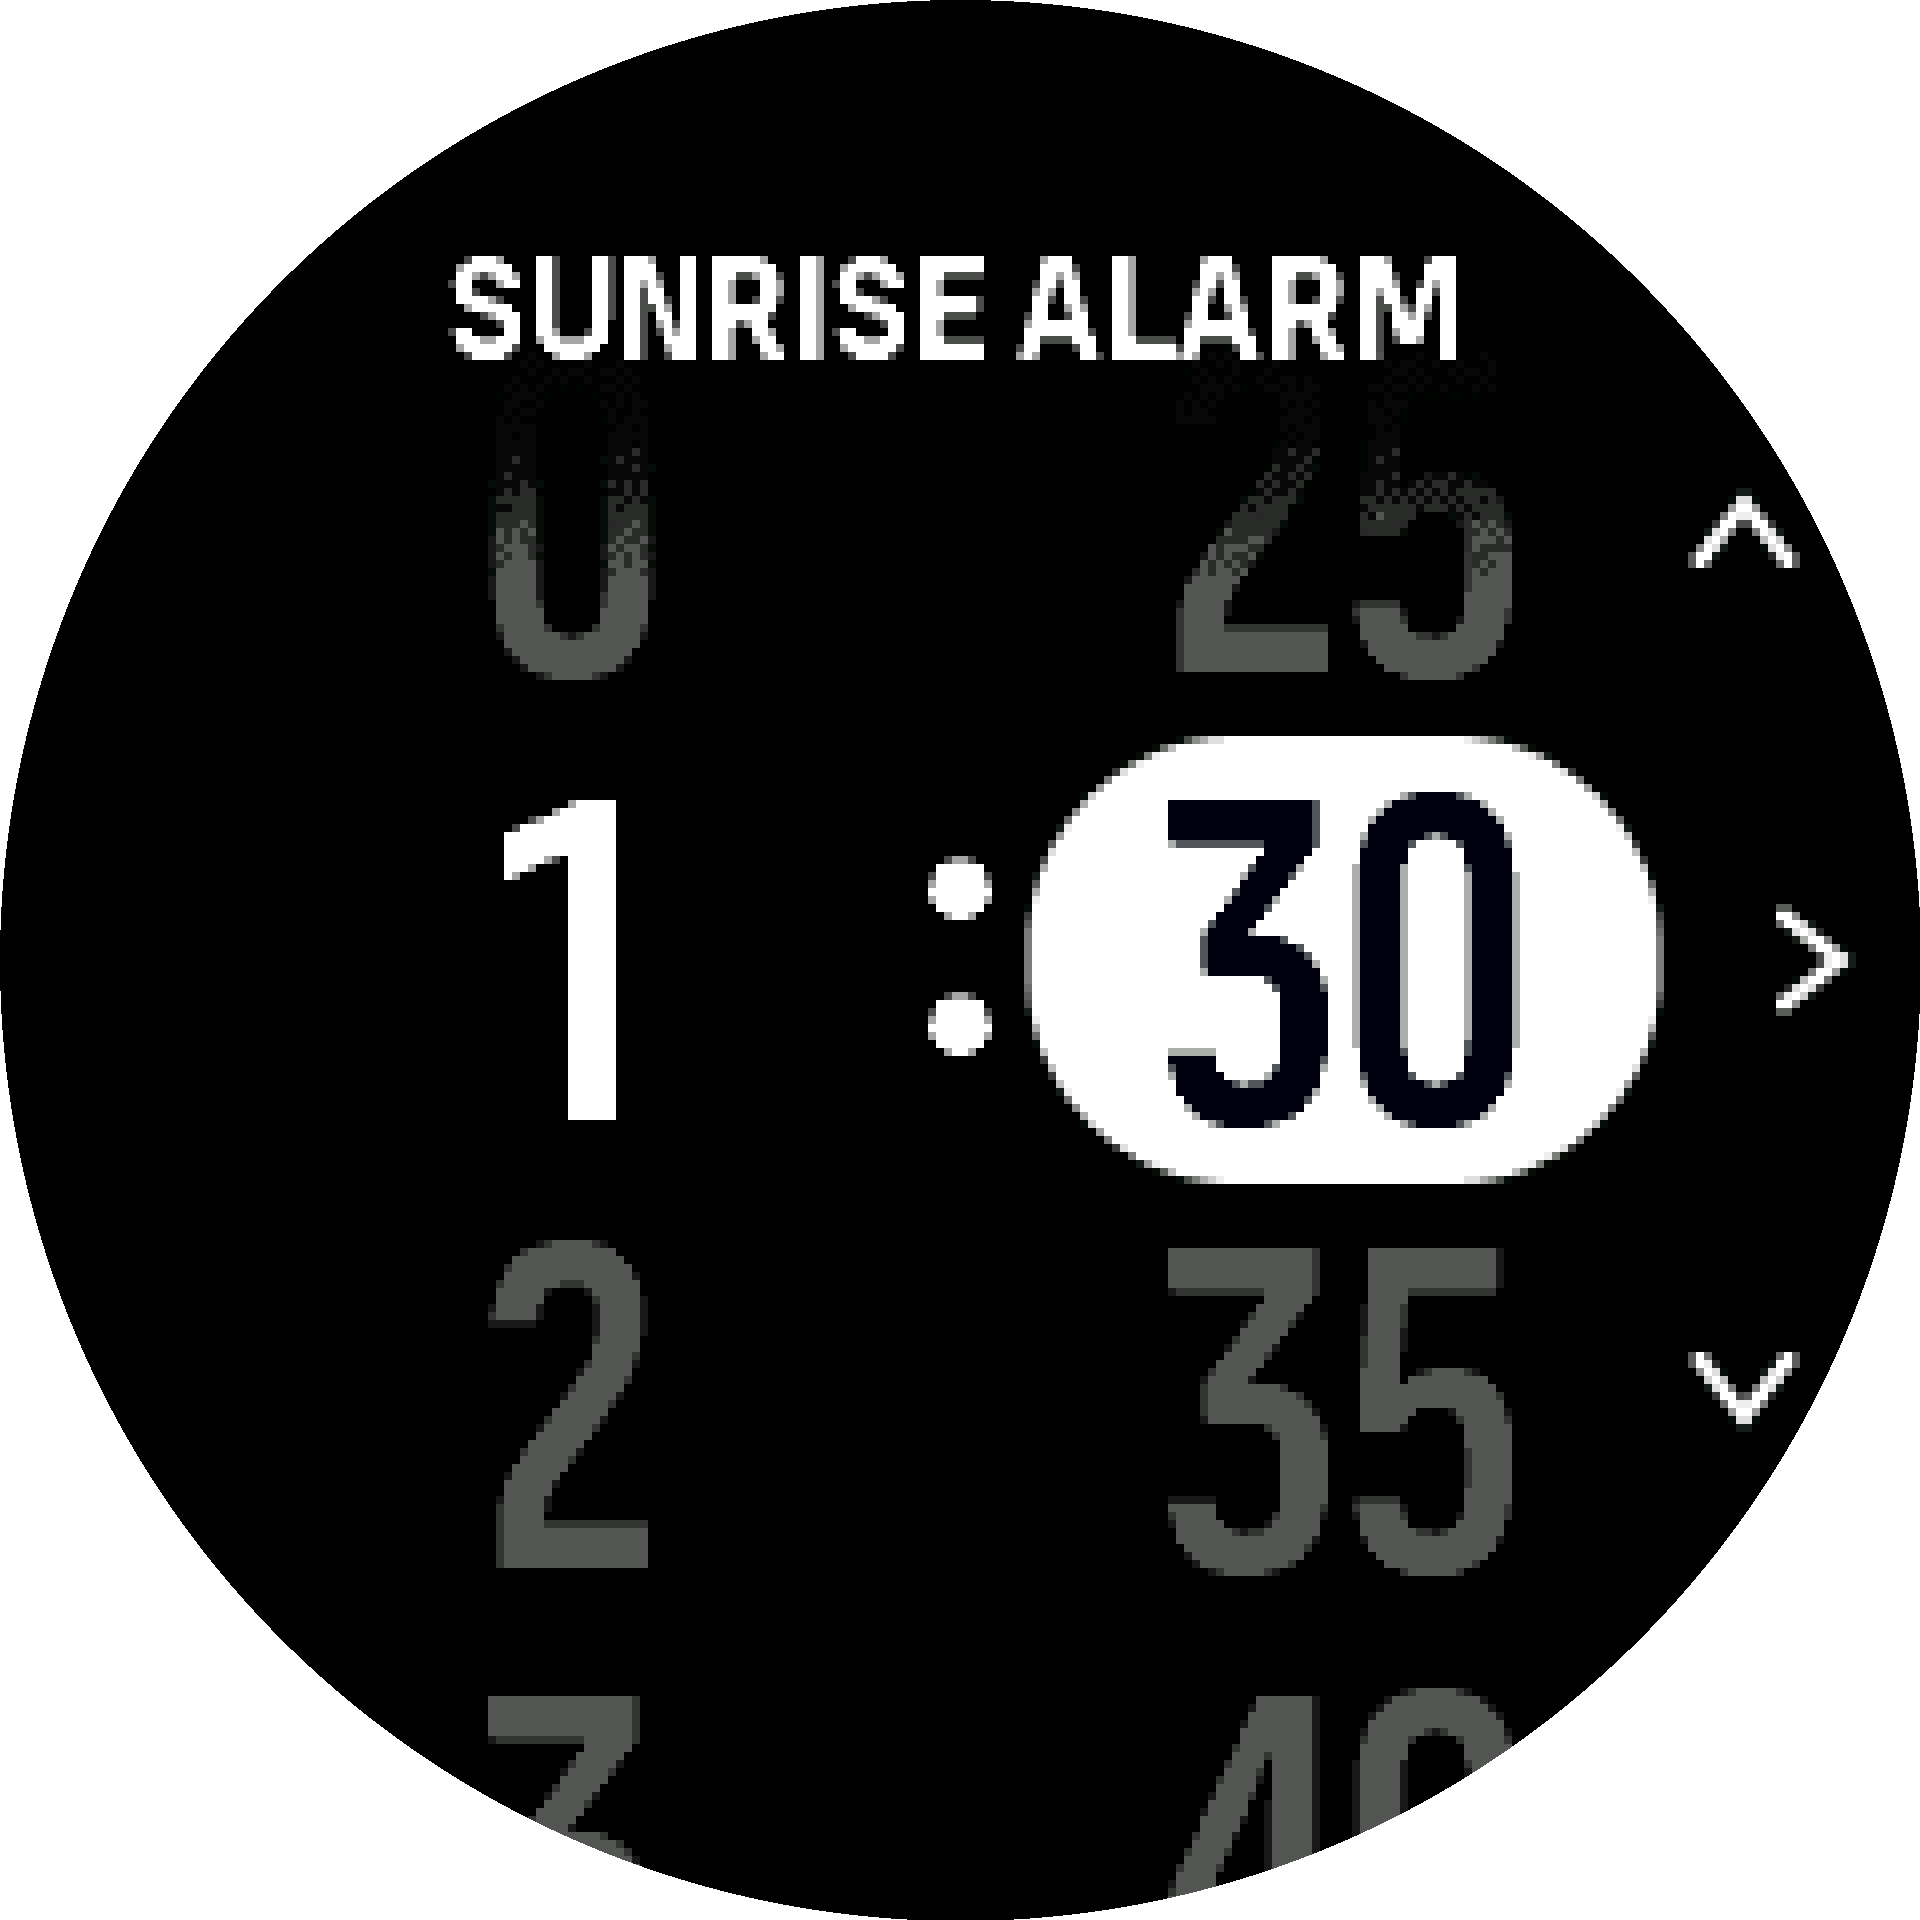 Time before sunset sunrise S9PP